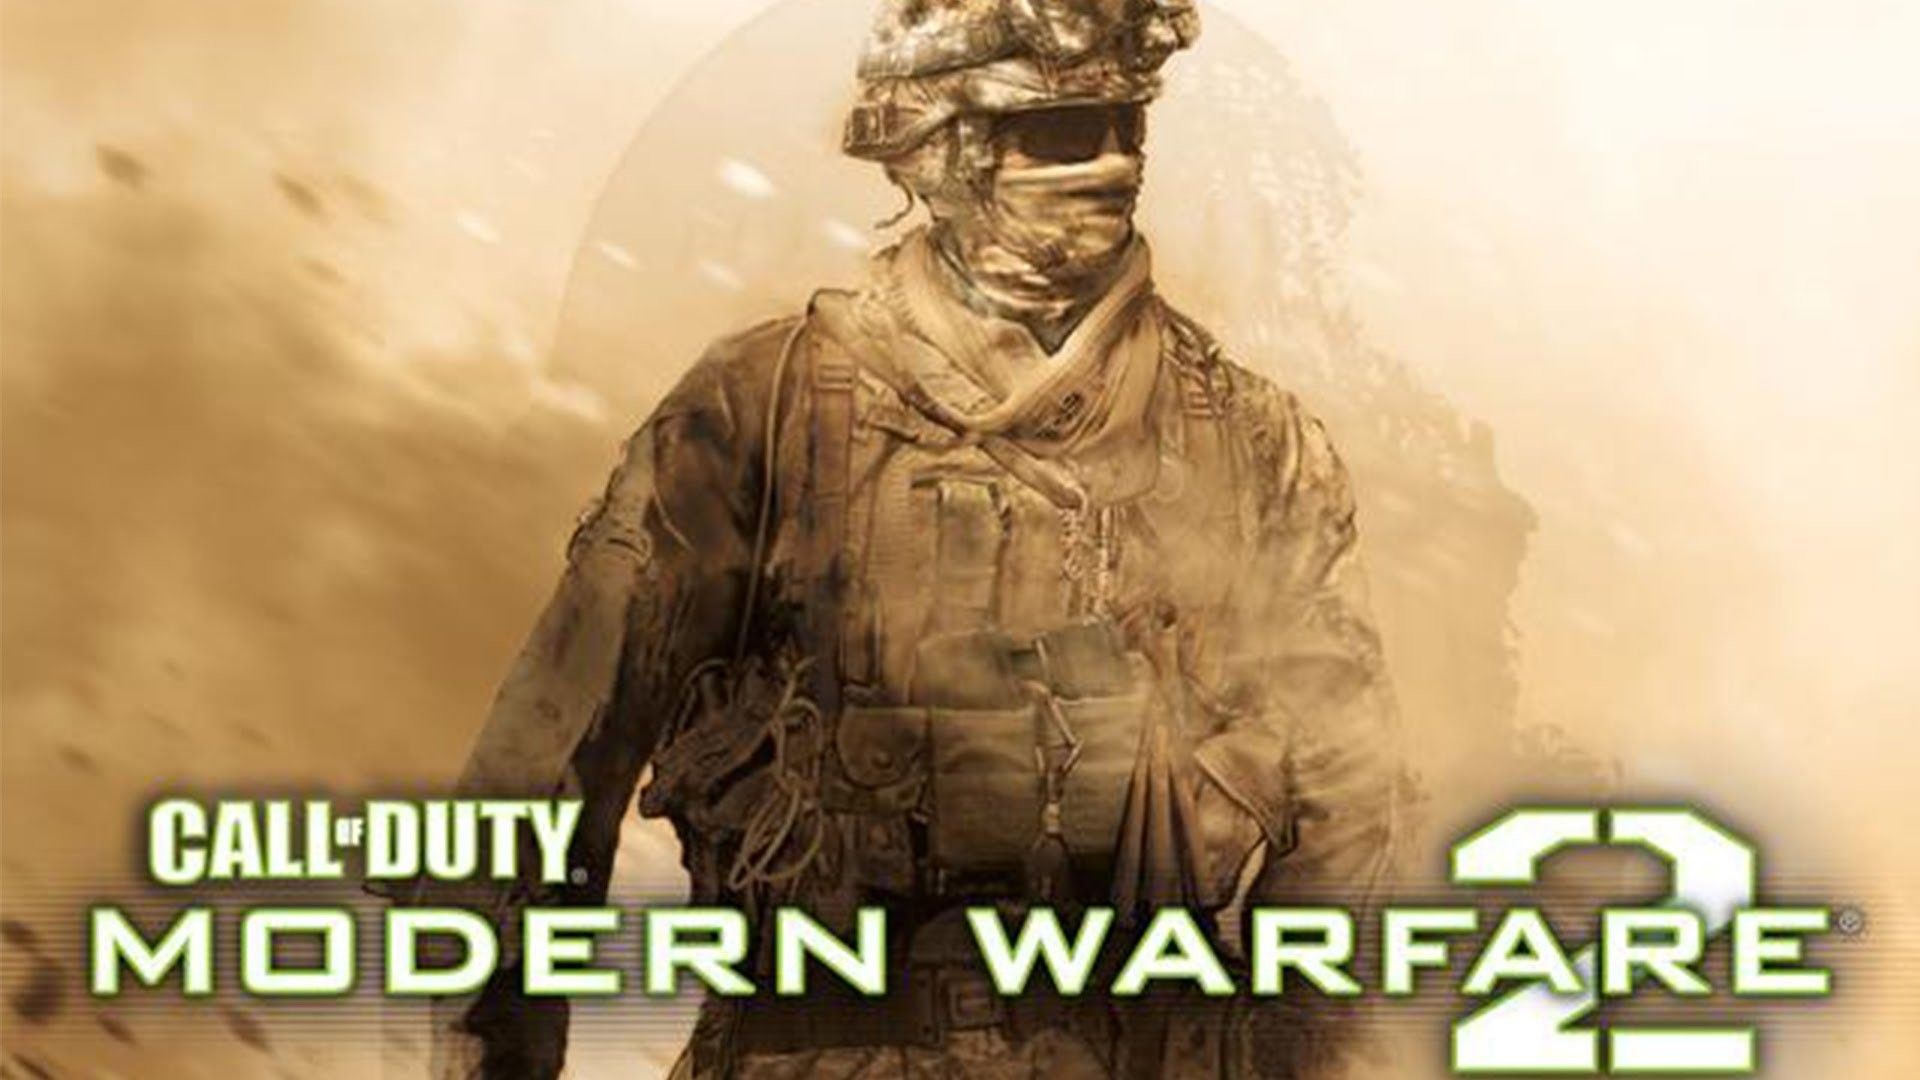 Modern Warfare 2 Background